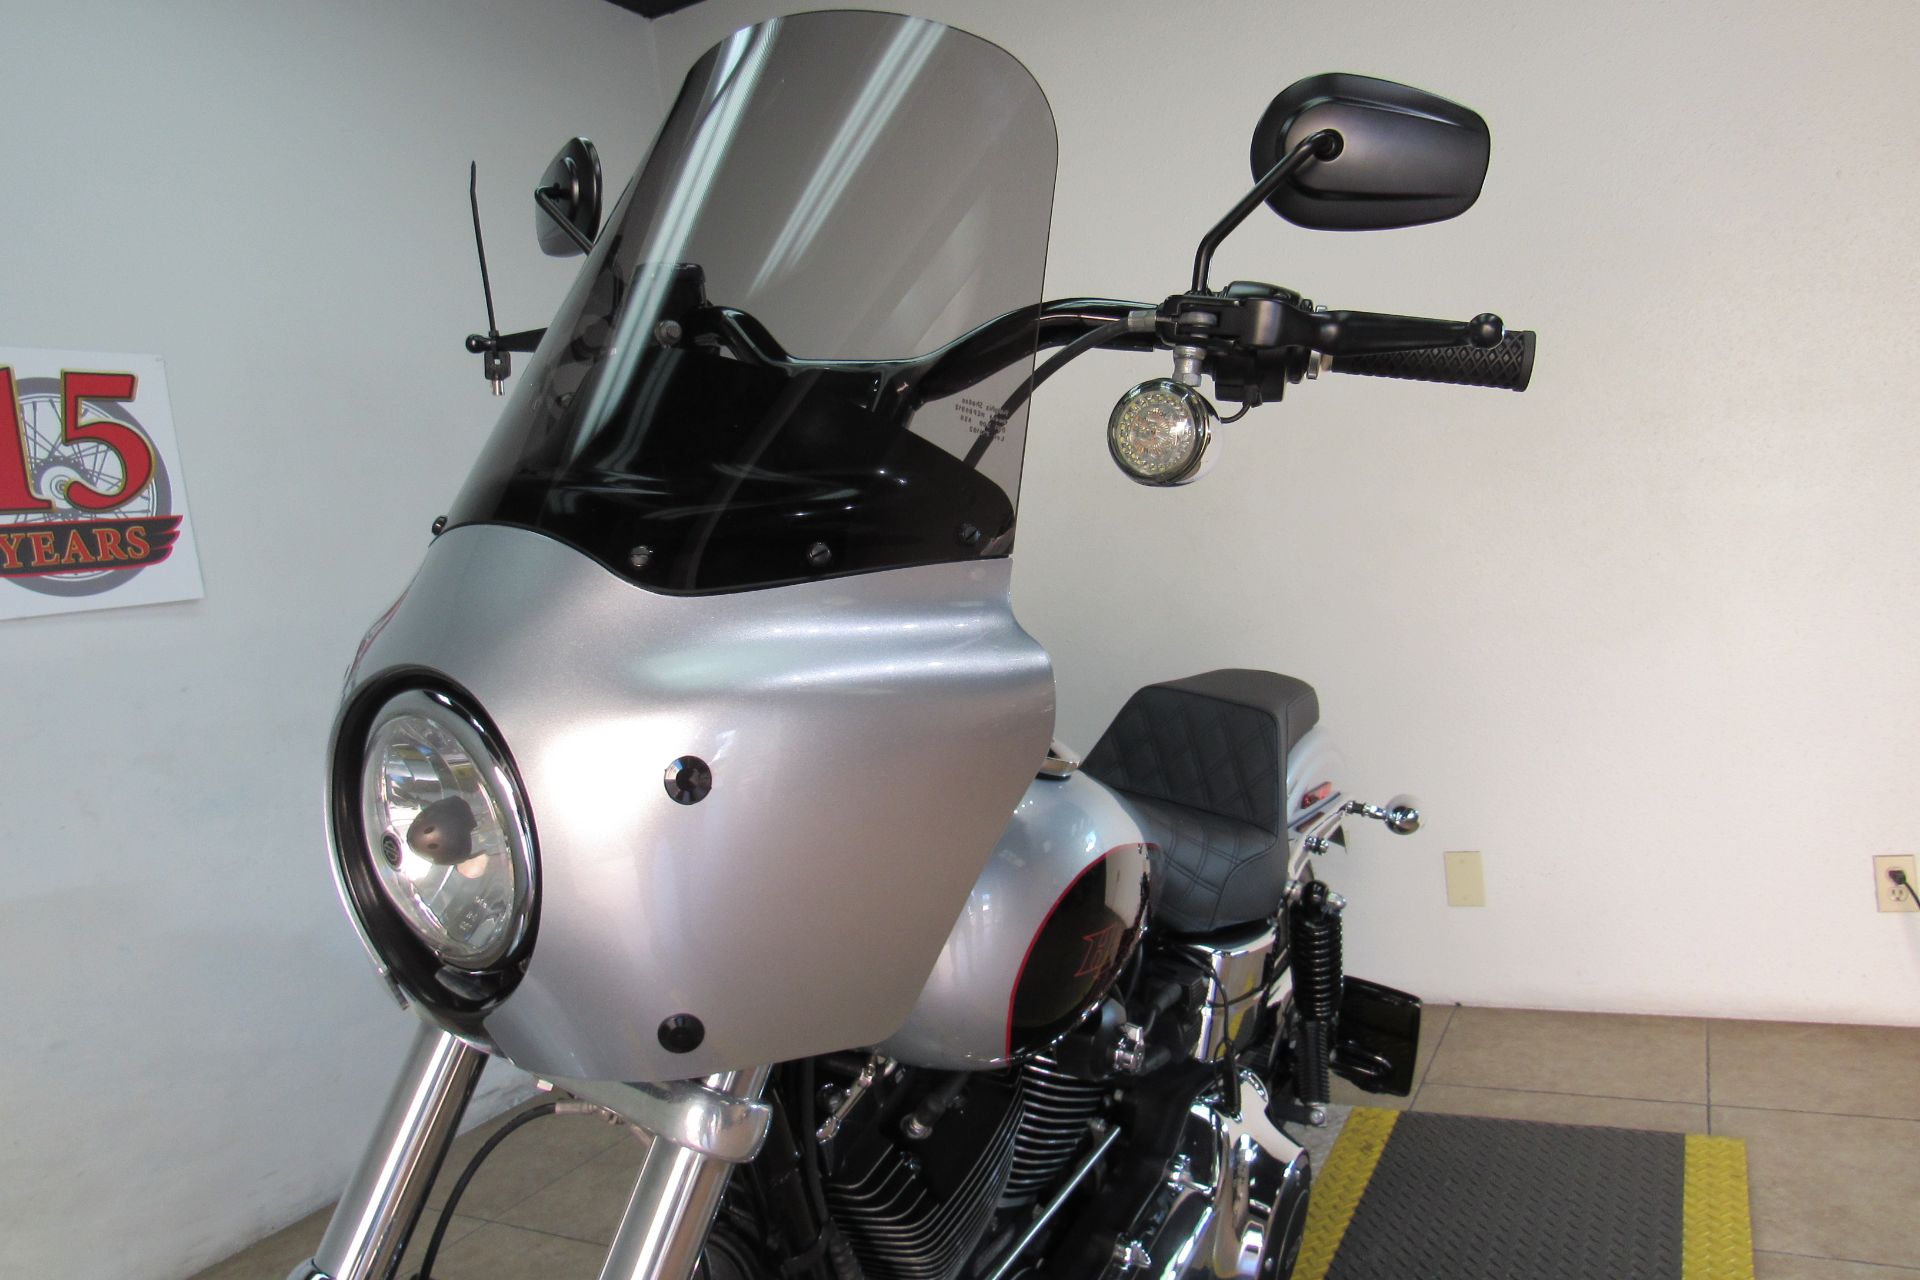 2015 Harley-Davidson Low Rider® in Temecula, California - Photo 4